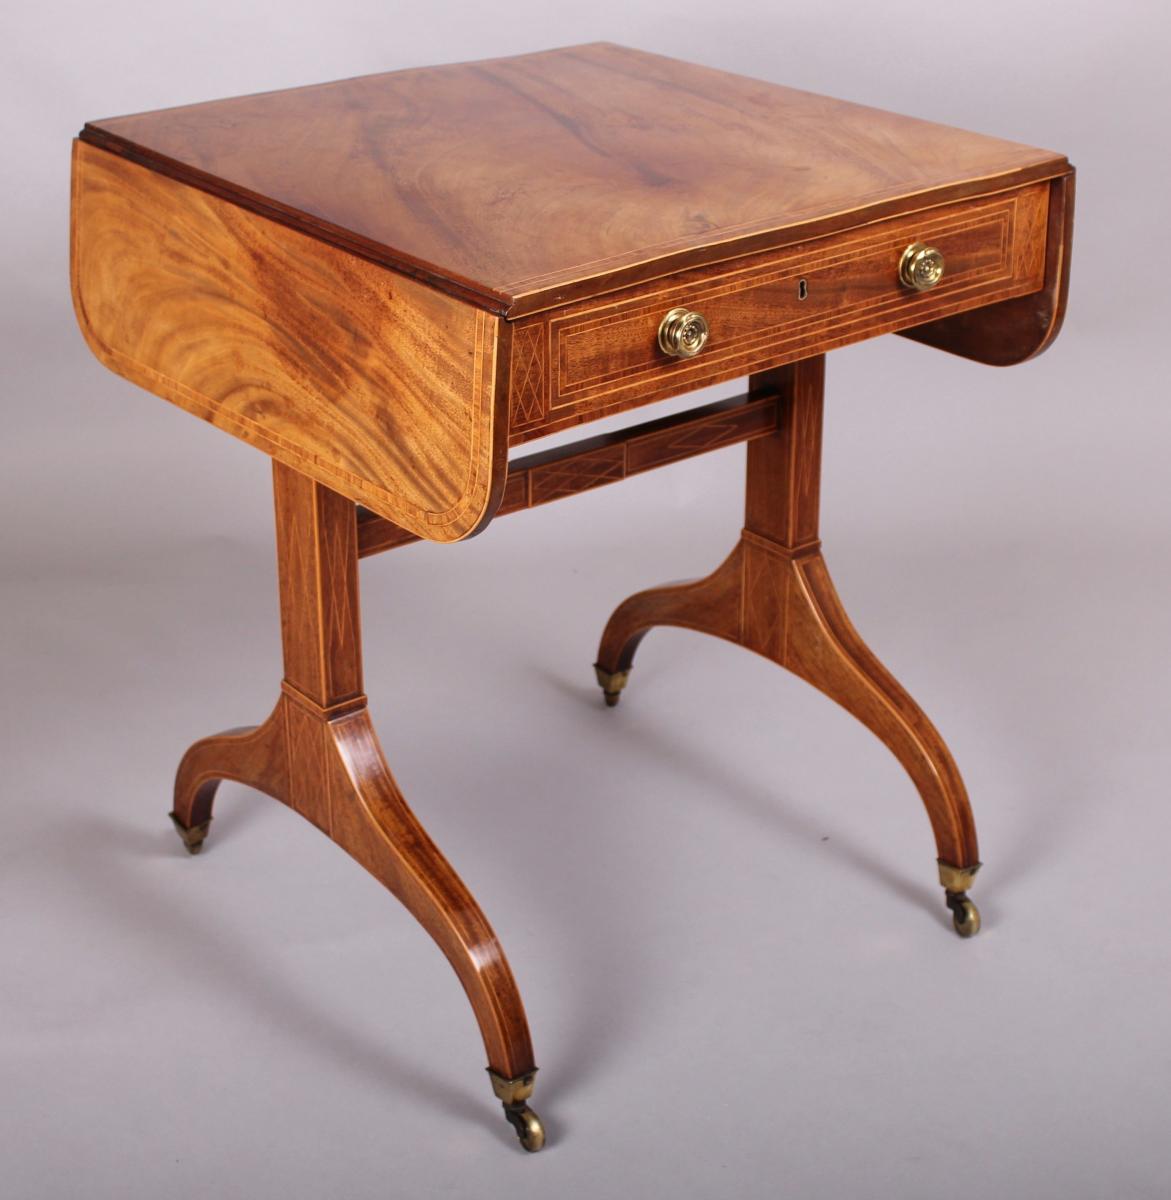 Rare and fine quality George III period mahogany sofa-table of diminutive proportions